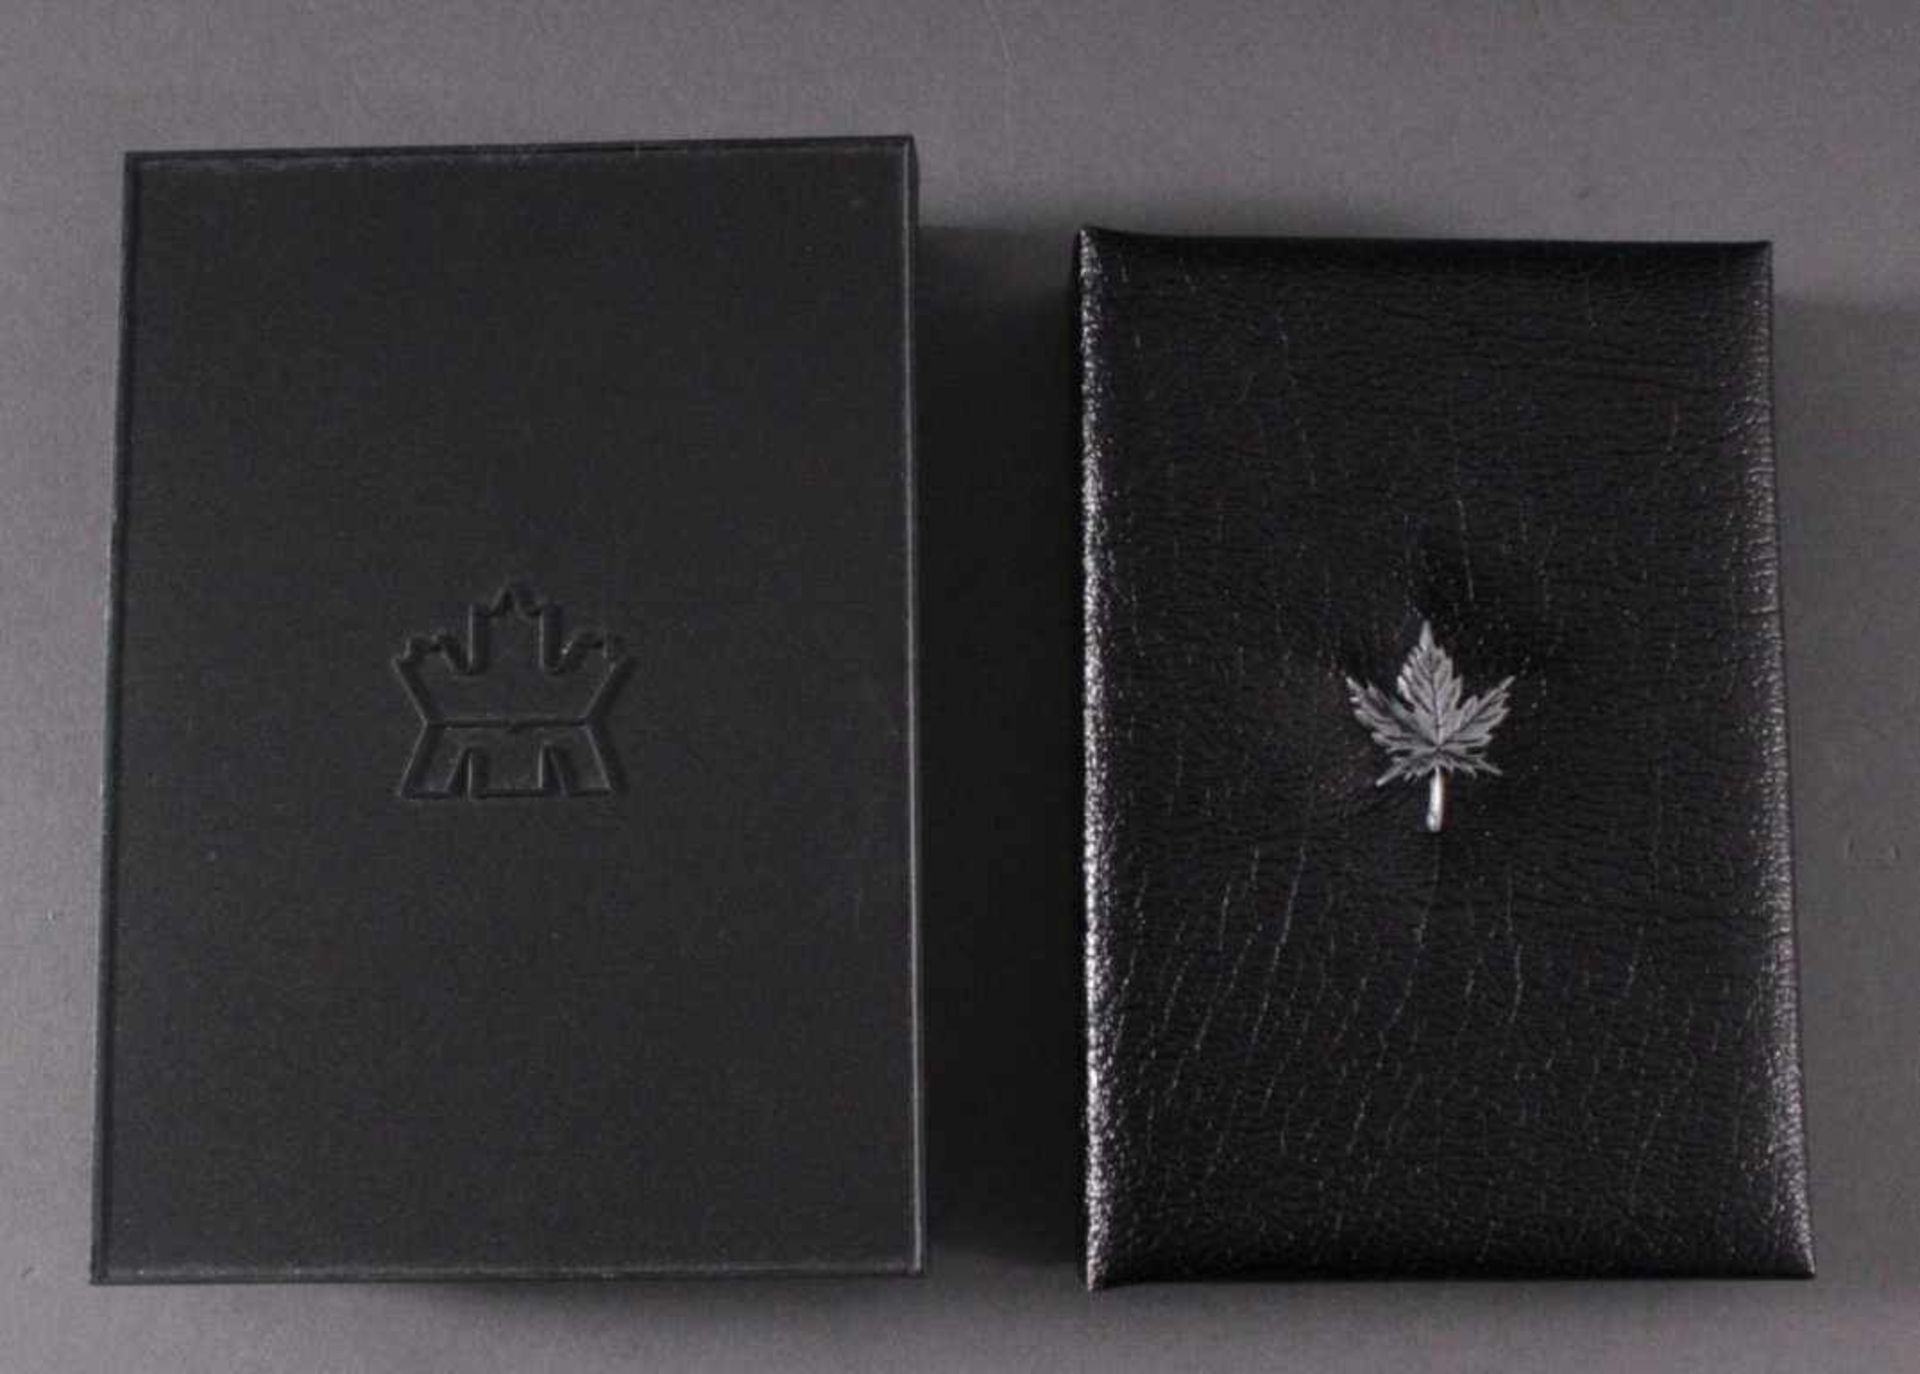 KMS Kanada 1987 PPMit Silberdollar in originaler Verpackung der Royal CanadianMint. - Image 3 of 3